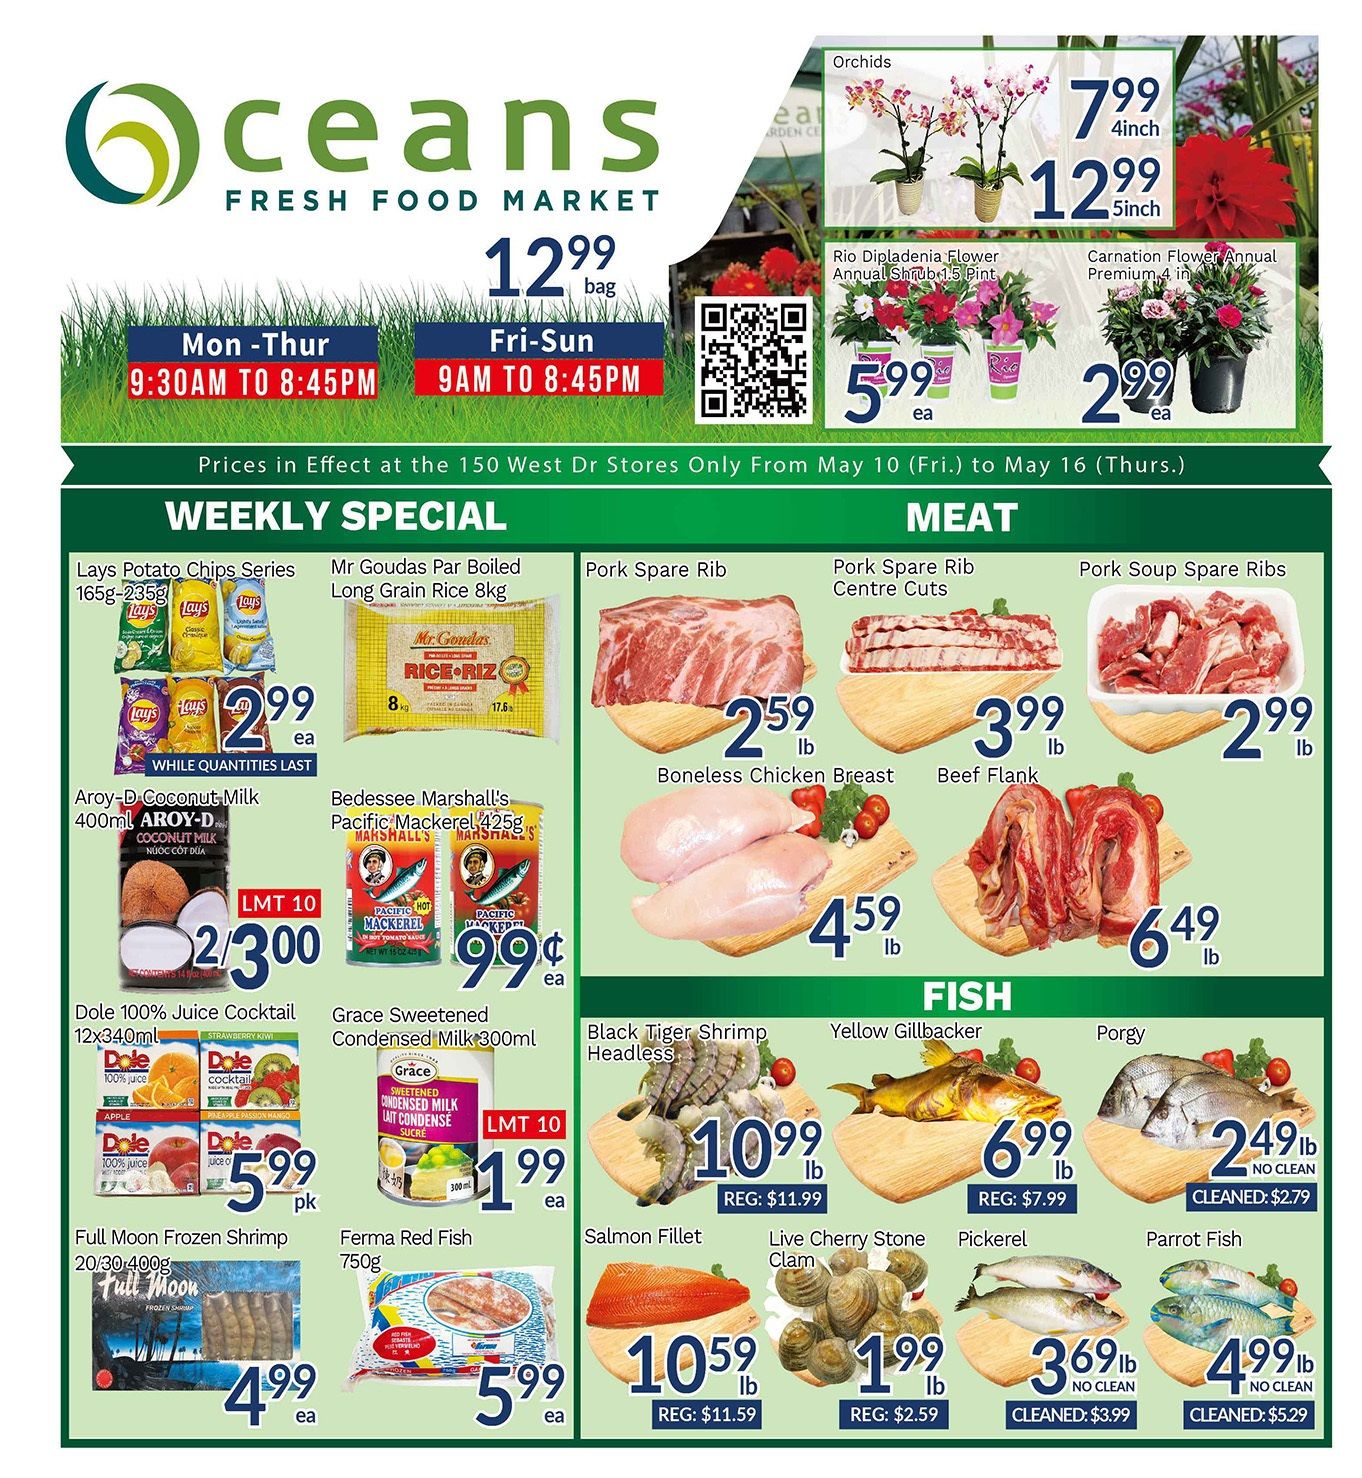 Oceans Fresh Food Market - Brampton West Drive - Weekly Flyer Specials